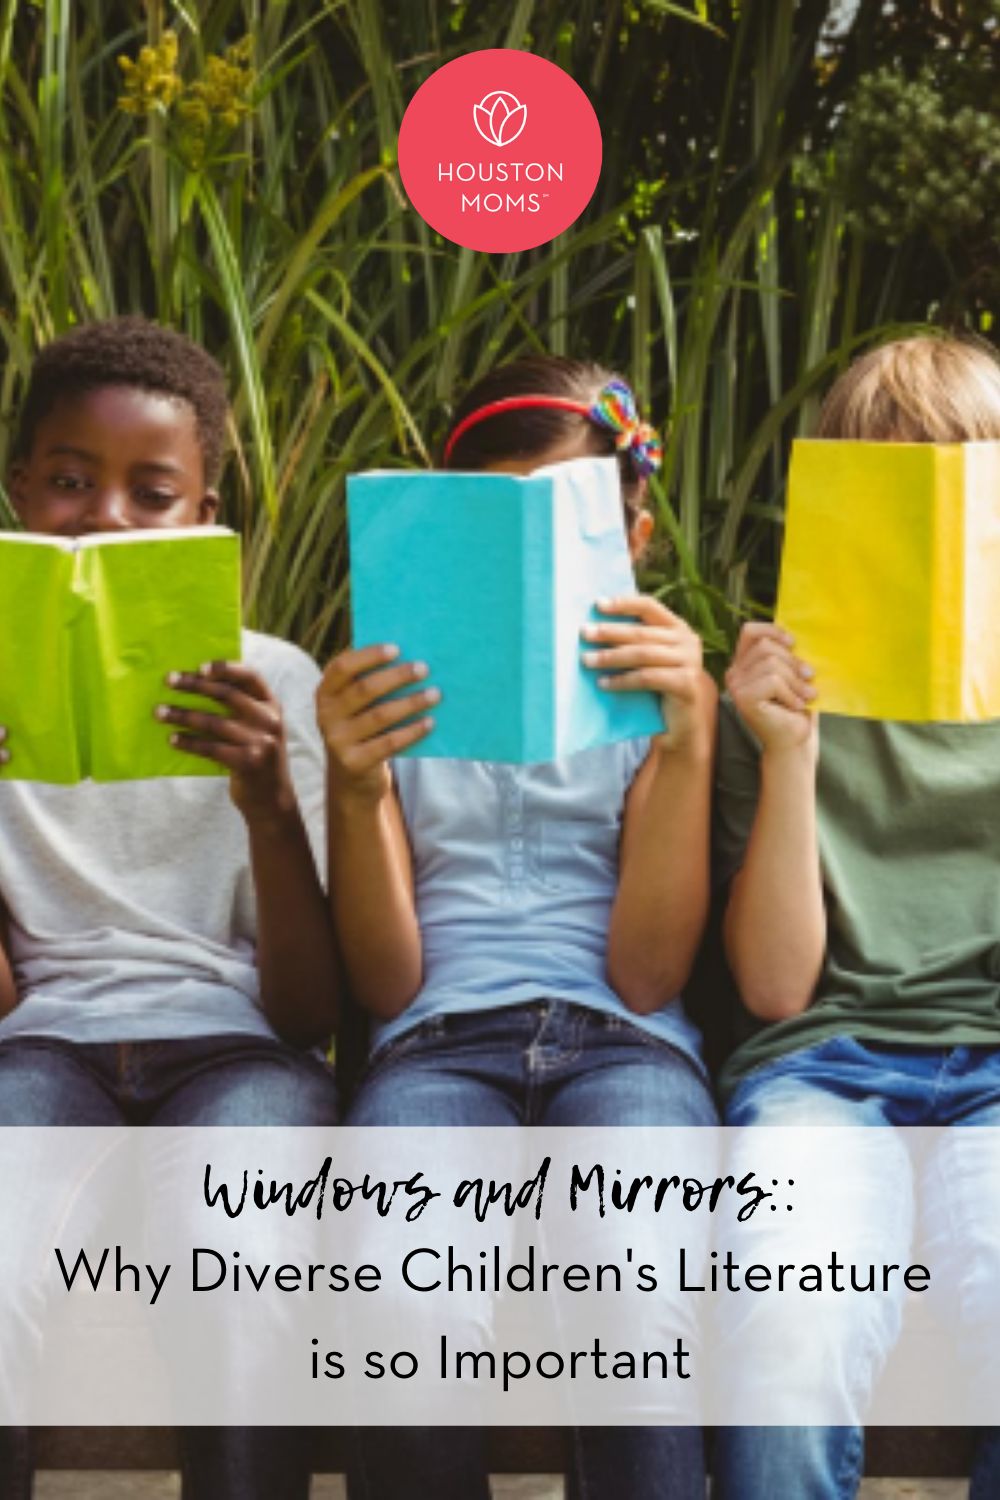 Houston Moms "Windows and Mirrors:: Why Diverse Children's Literature is so Important" #houstonmoms #houstonmomsblog #momsaroundhouston